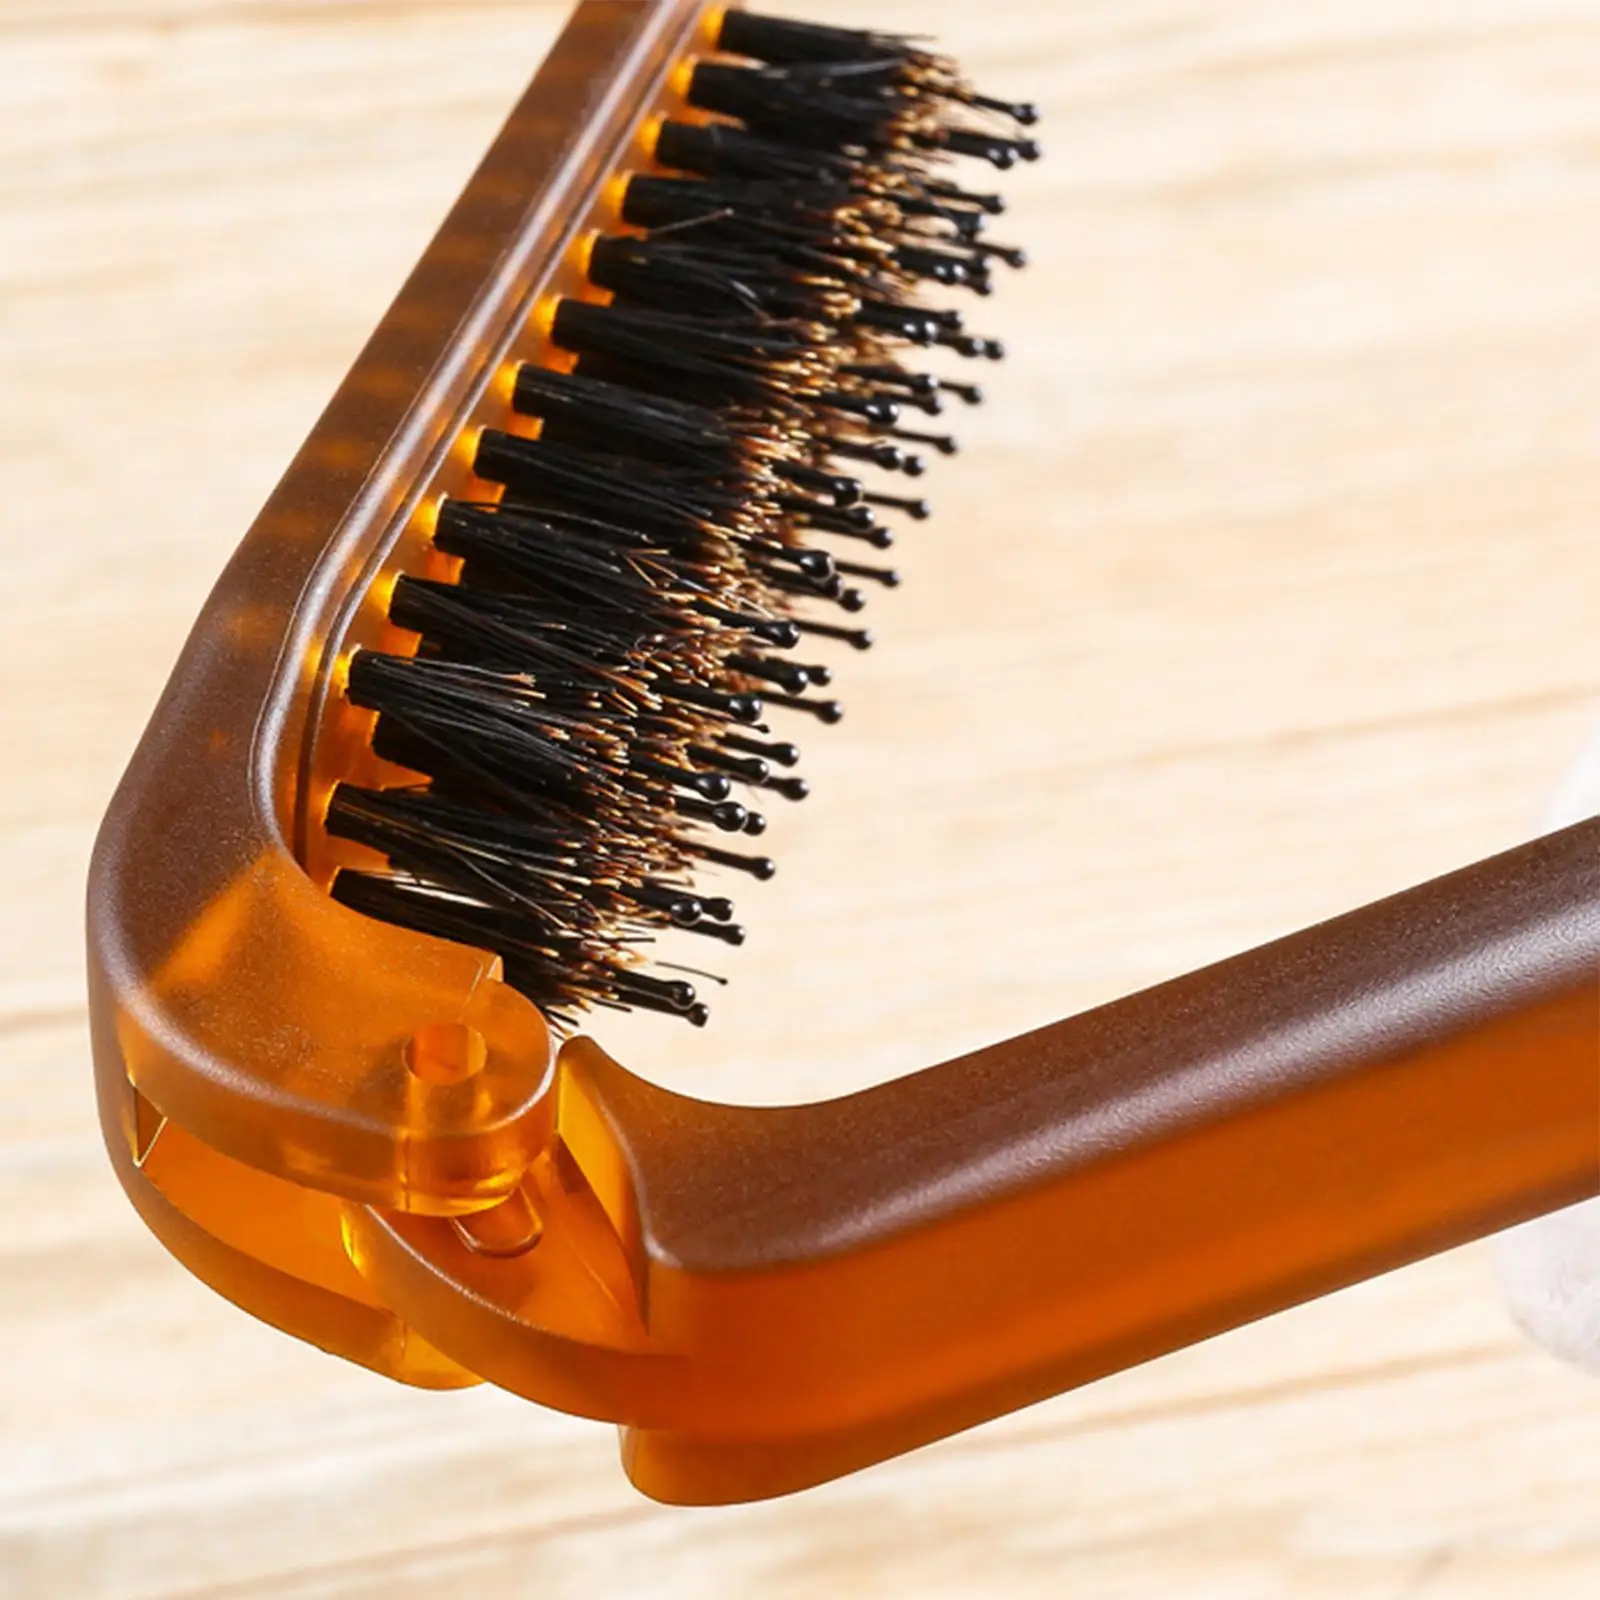 Folding Hair Brush Collapsible Styling Brush Hairdressing Tools Grooming & Combing for Purse Locker Family Car Men Women